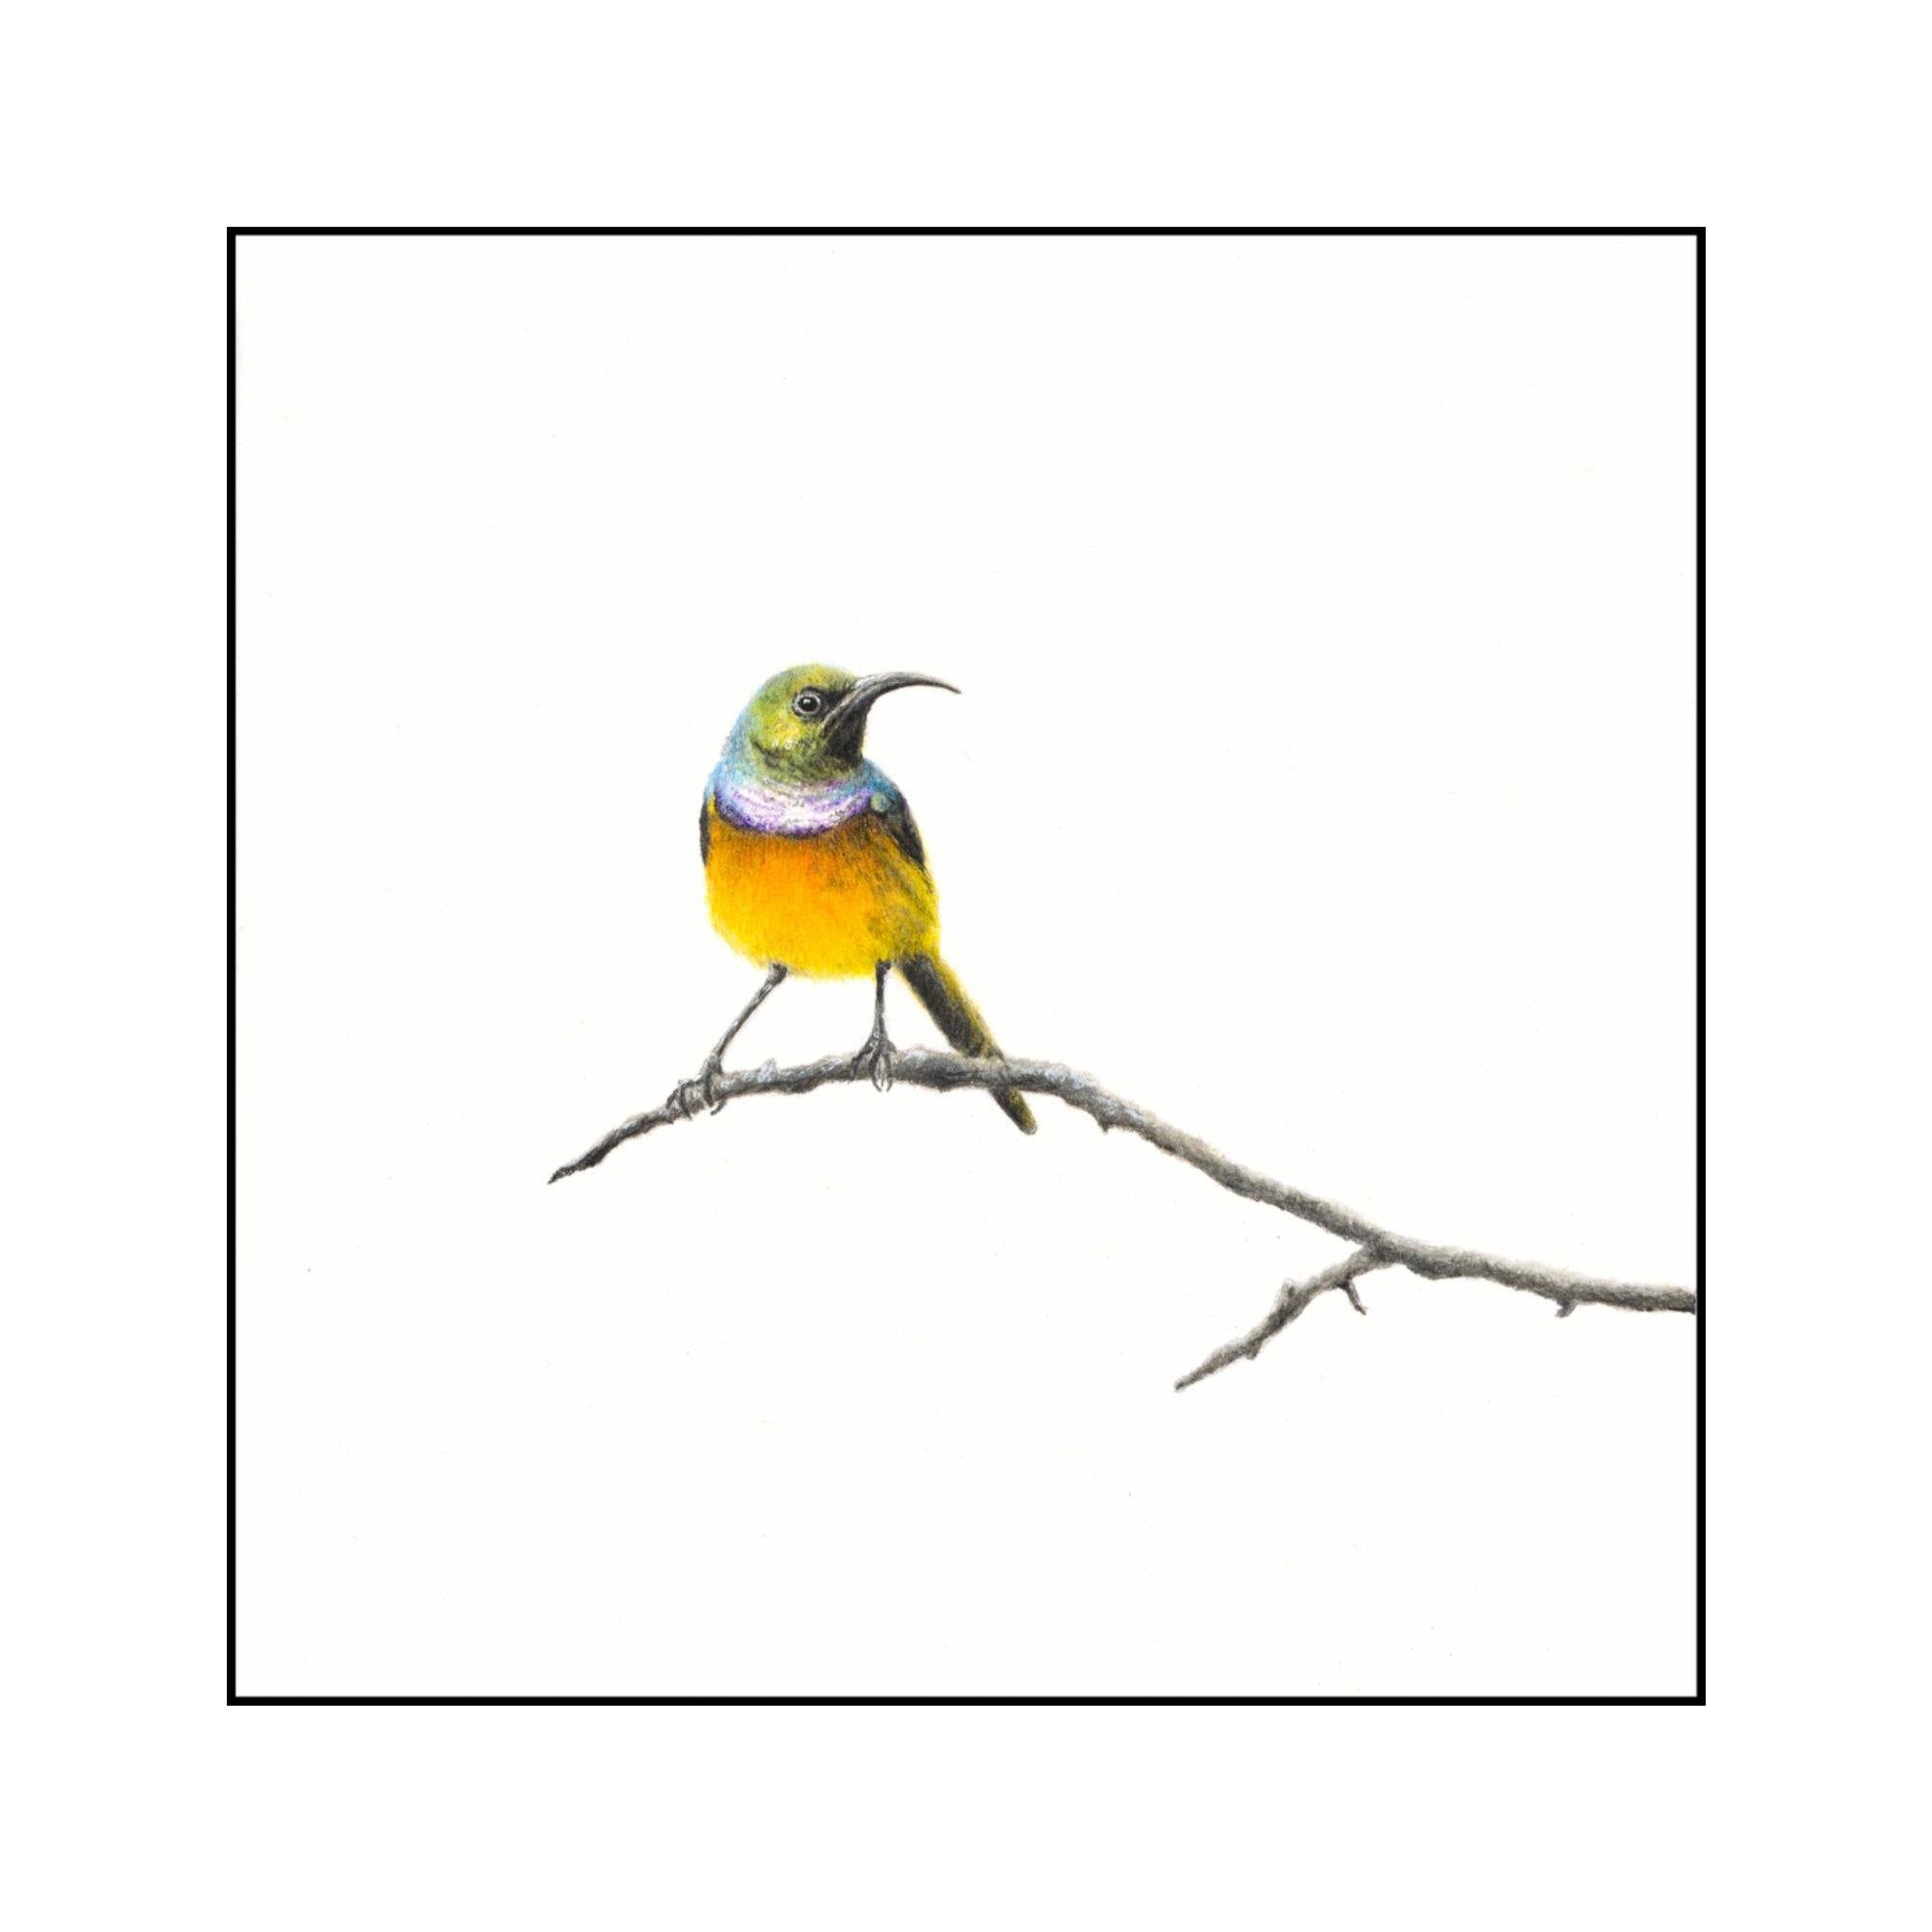 Orange Breasted Sunbird Miniature Original (ORMINS2-3/10) - Matthew Bell Wildlife Art